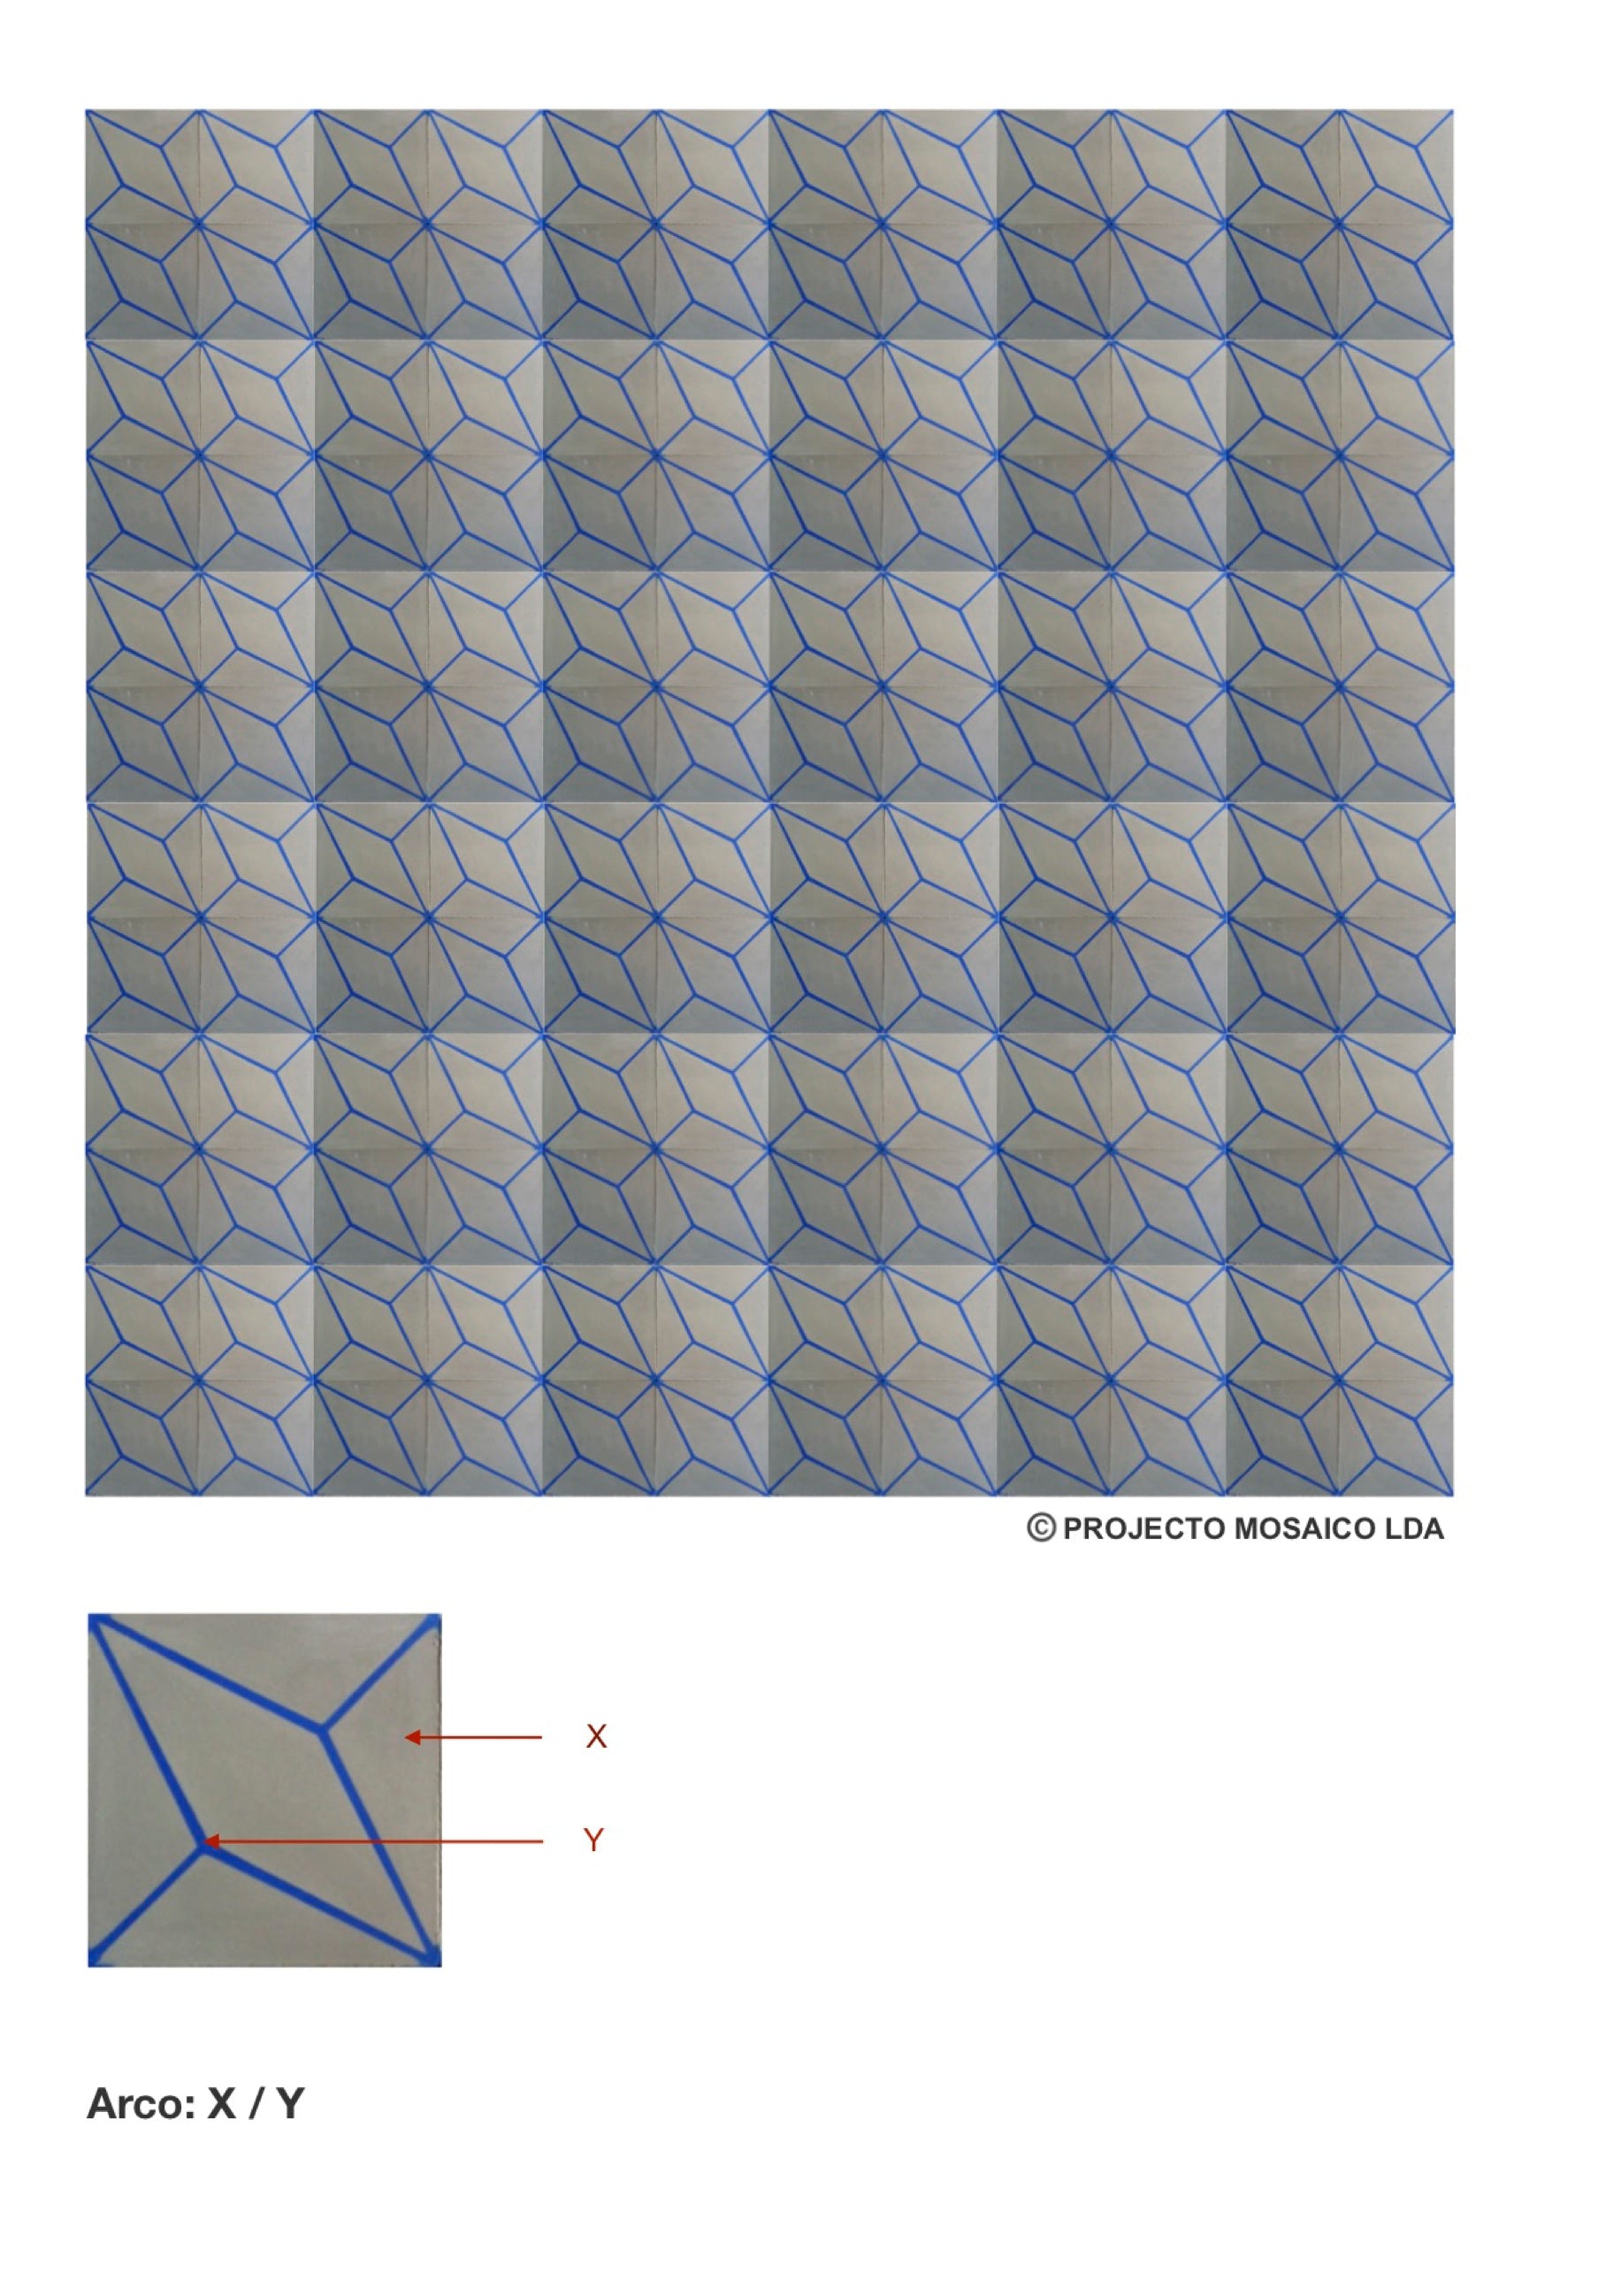 Panel Ilustrativo de mosaico hidráulico com o desenho geométrico ref: Arco